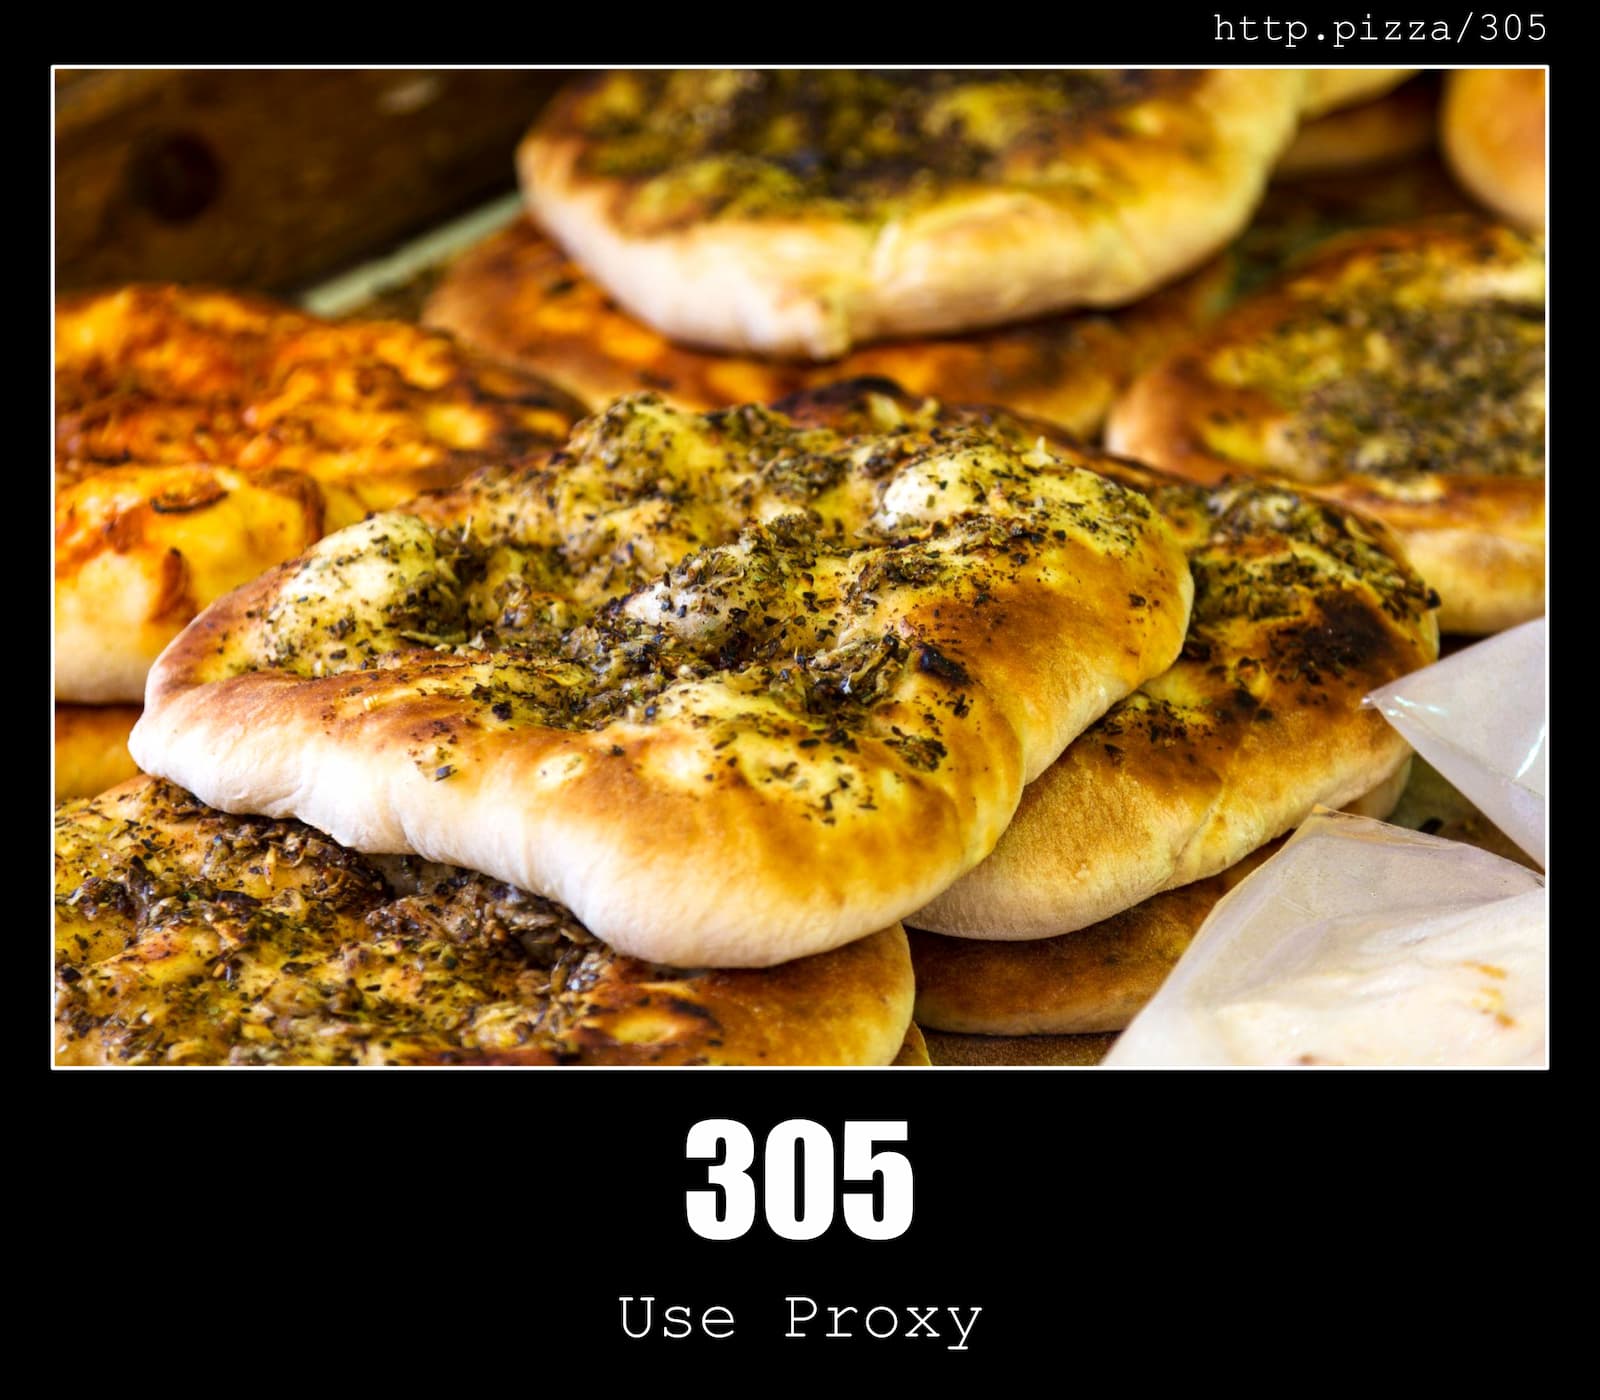 HTTP Status Code 305 Use Proxy & Pizzas